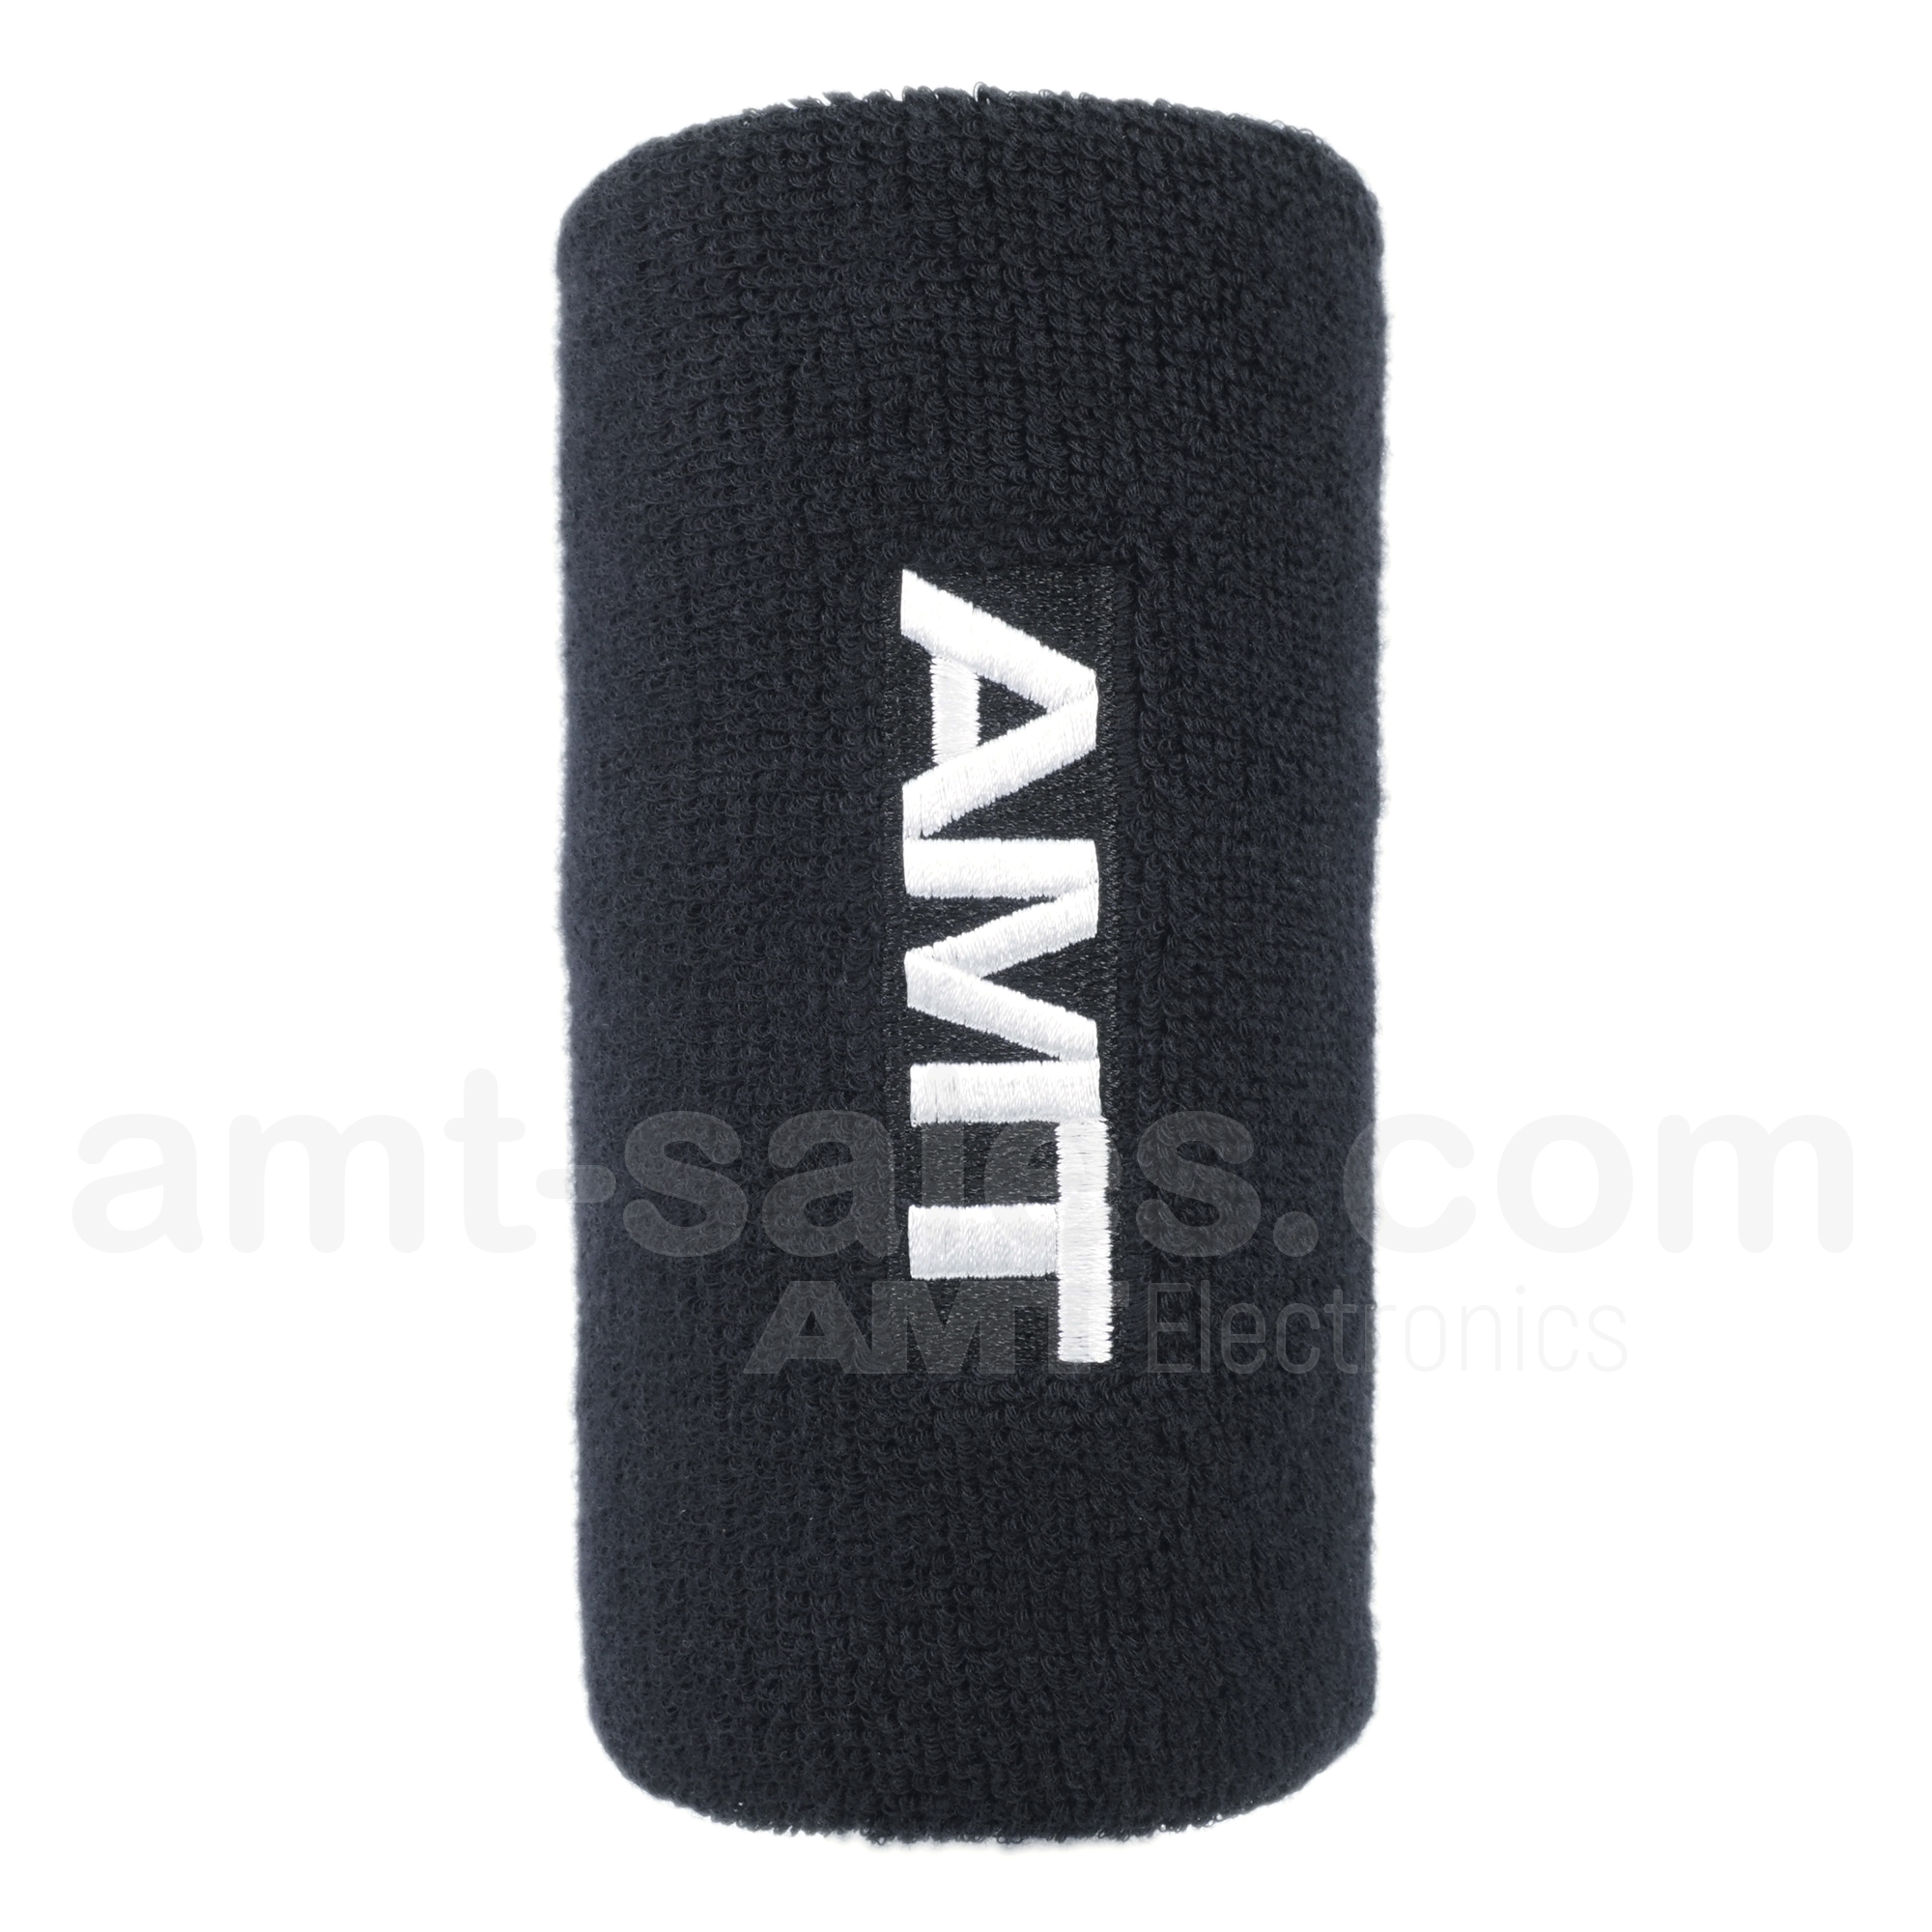 AMT Wristband - wristband with AMT logo